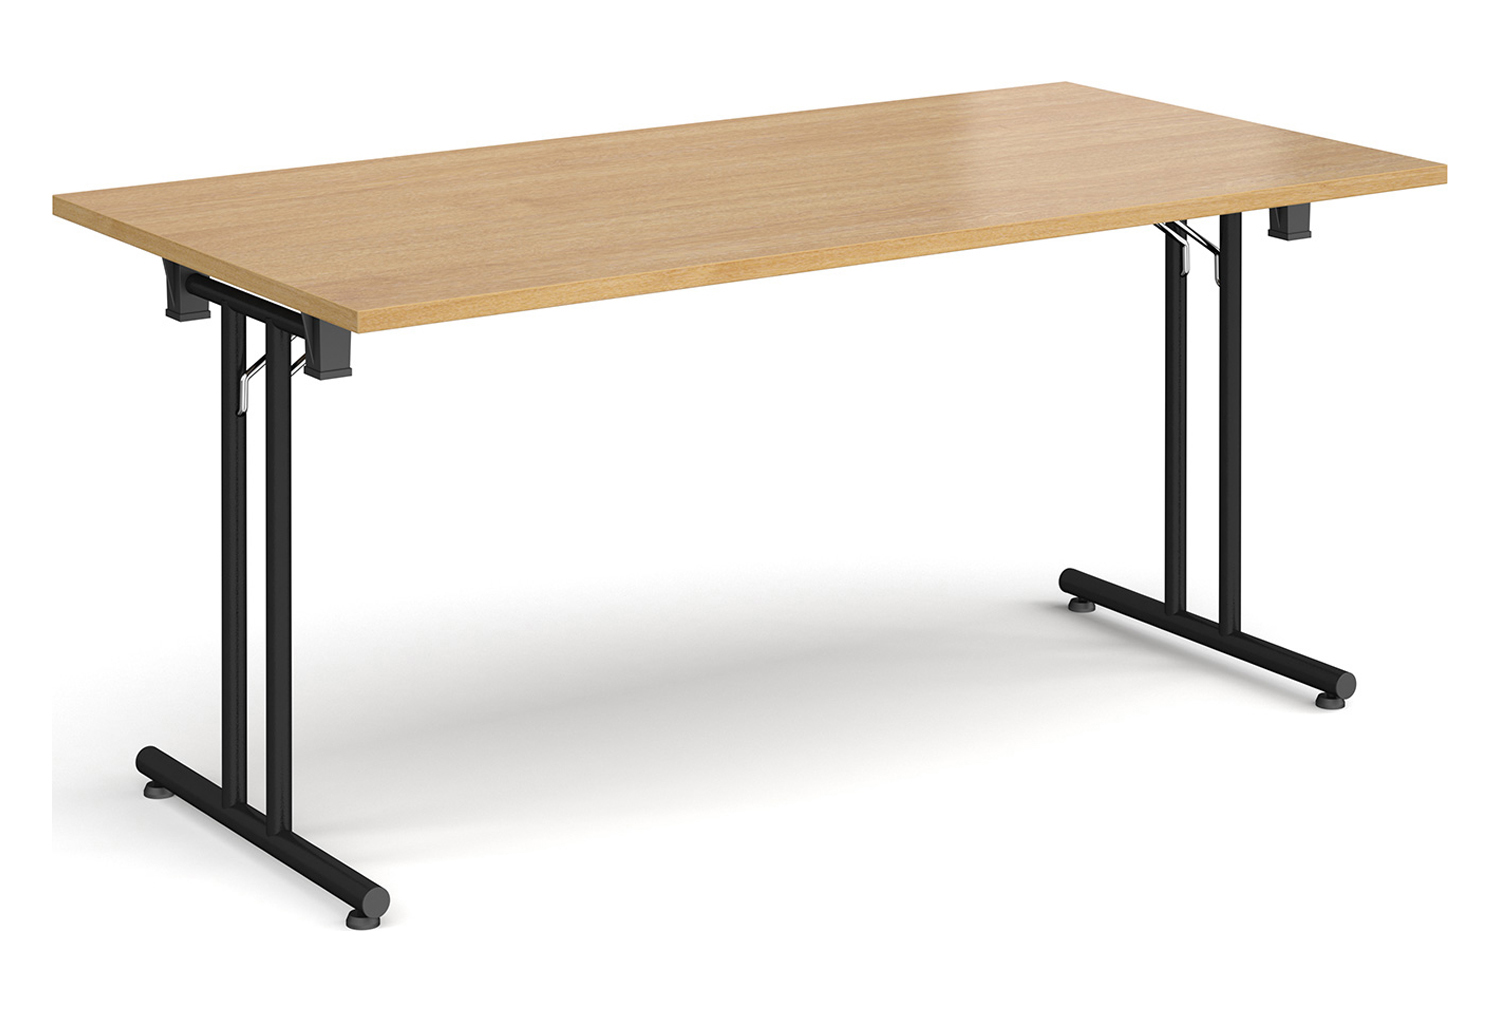 Durand Rectangular Folding Table, 160wx80dx73h (cm), Black Frame, Oak